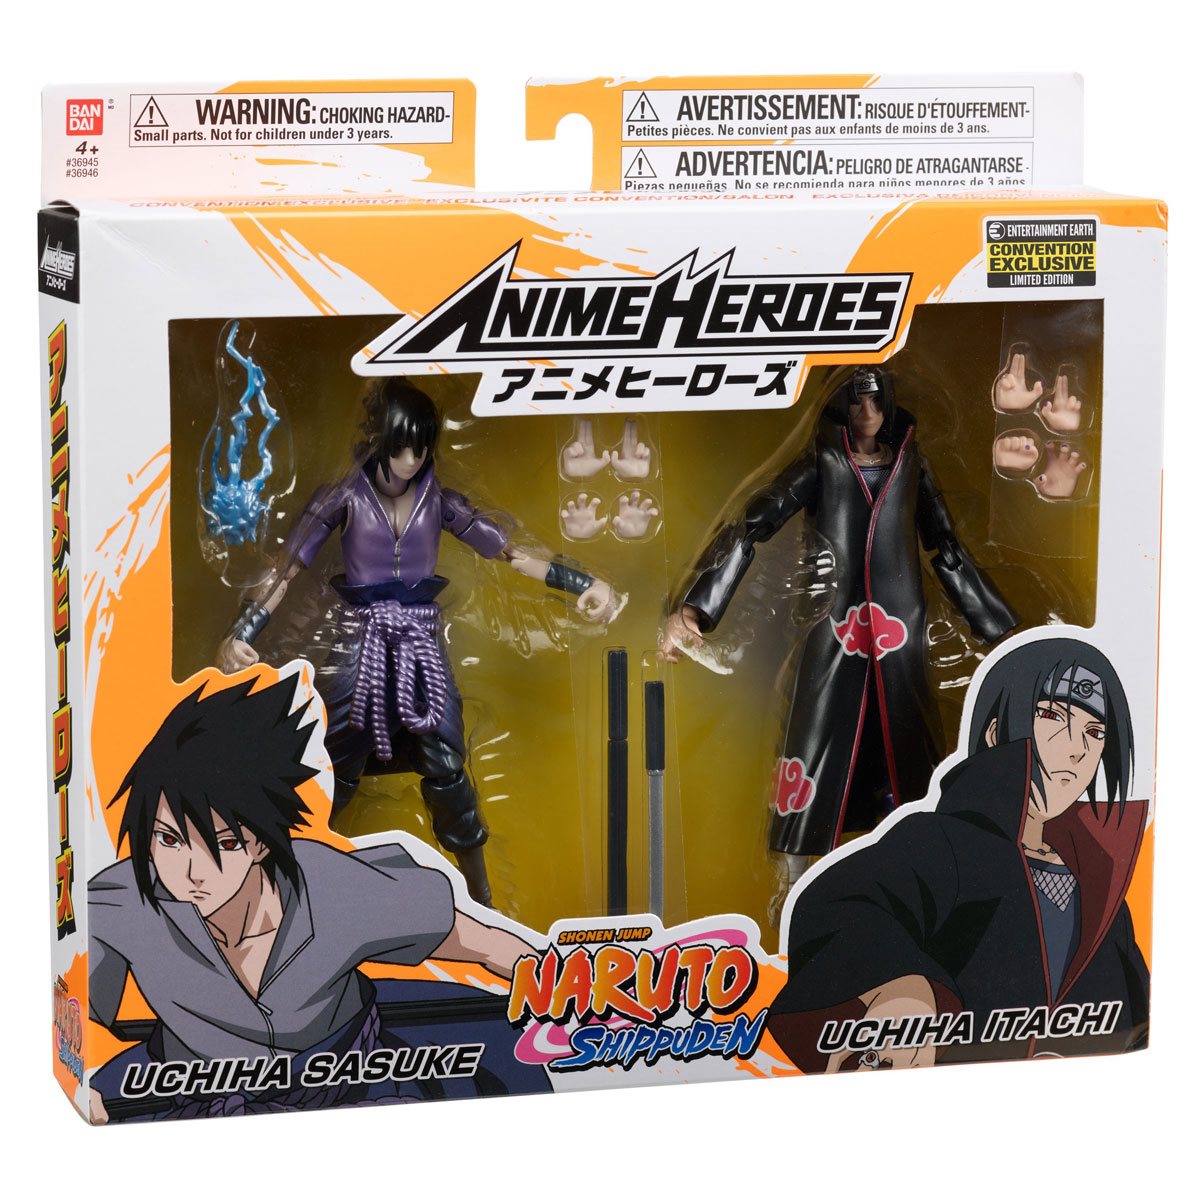 Naruto Shippuden Anime Heroes Itachi And Sasuke Uchiha Action Figure 2 Pack Entertainment Earth Exclusive